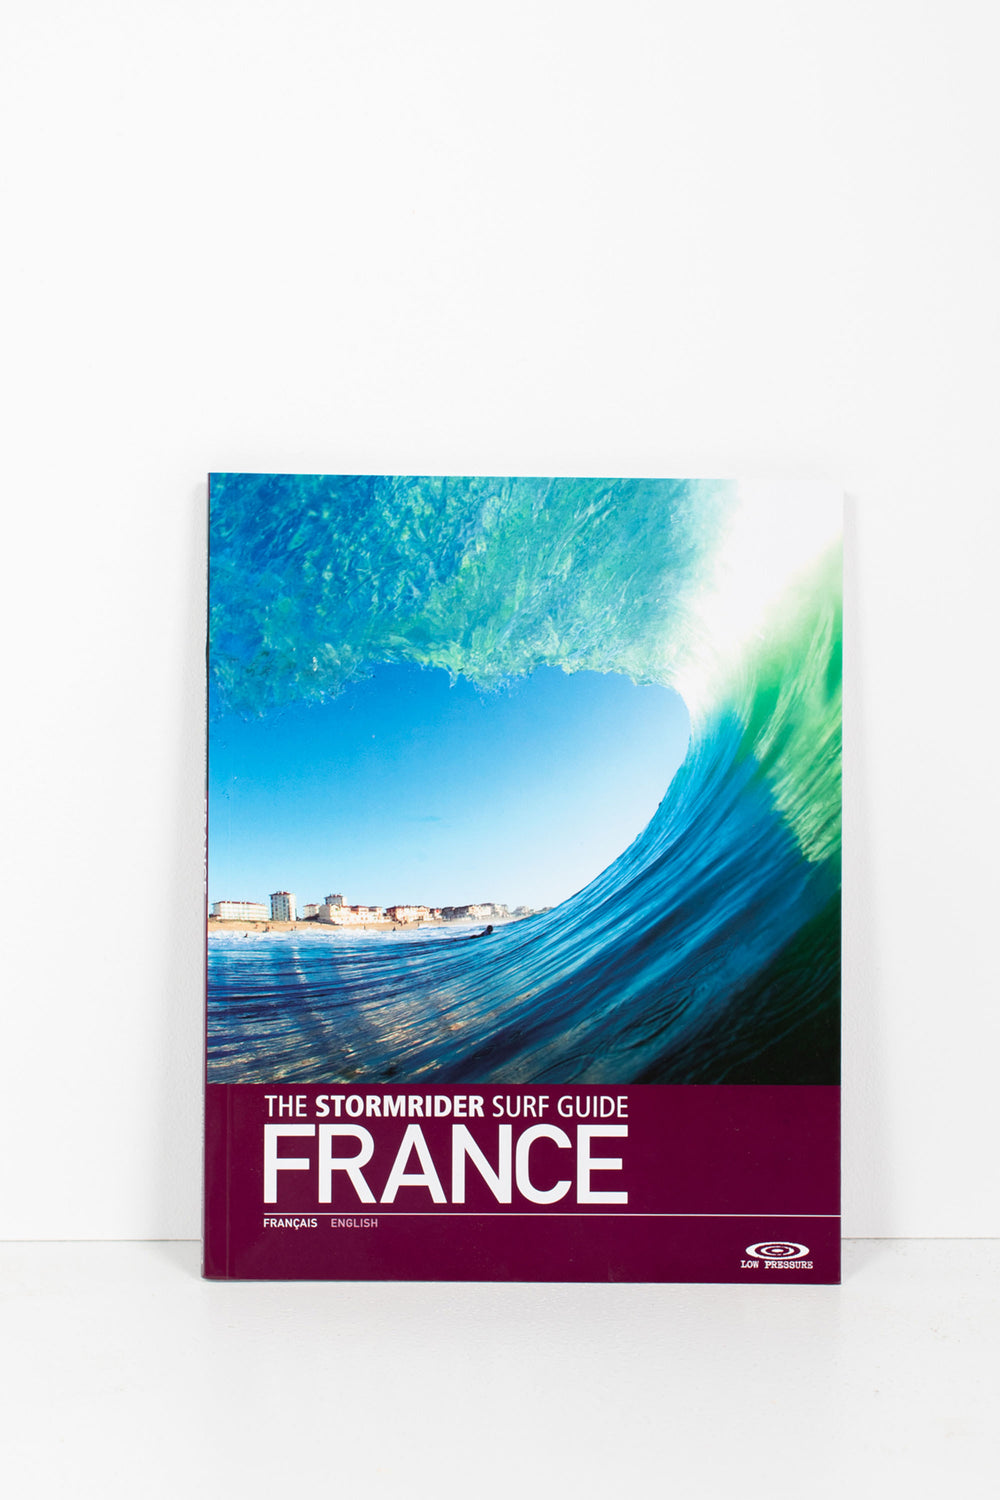 Pukas-Surf-Shop-Book-The stormrider surf guide france